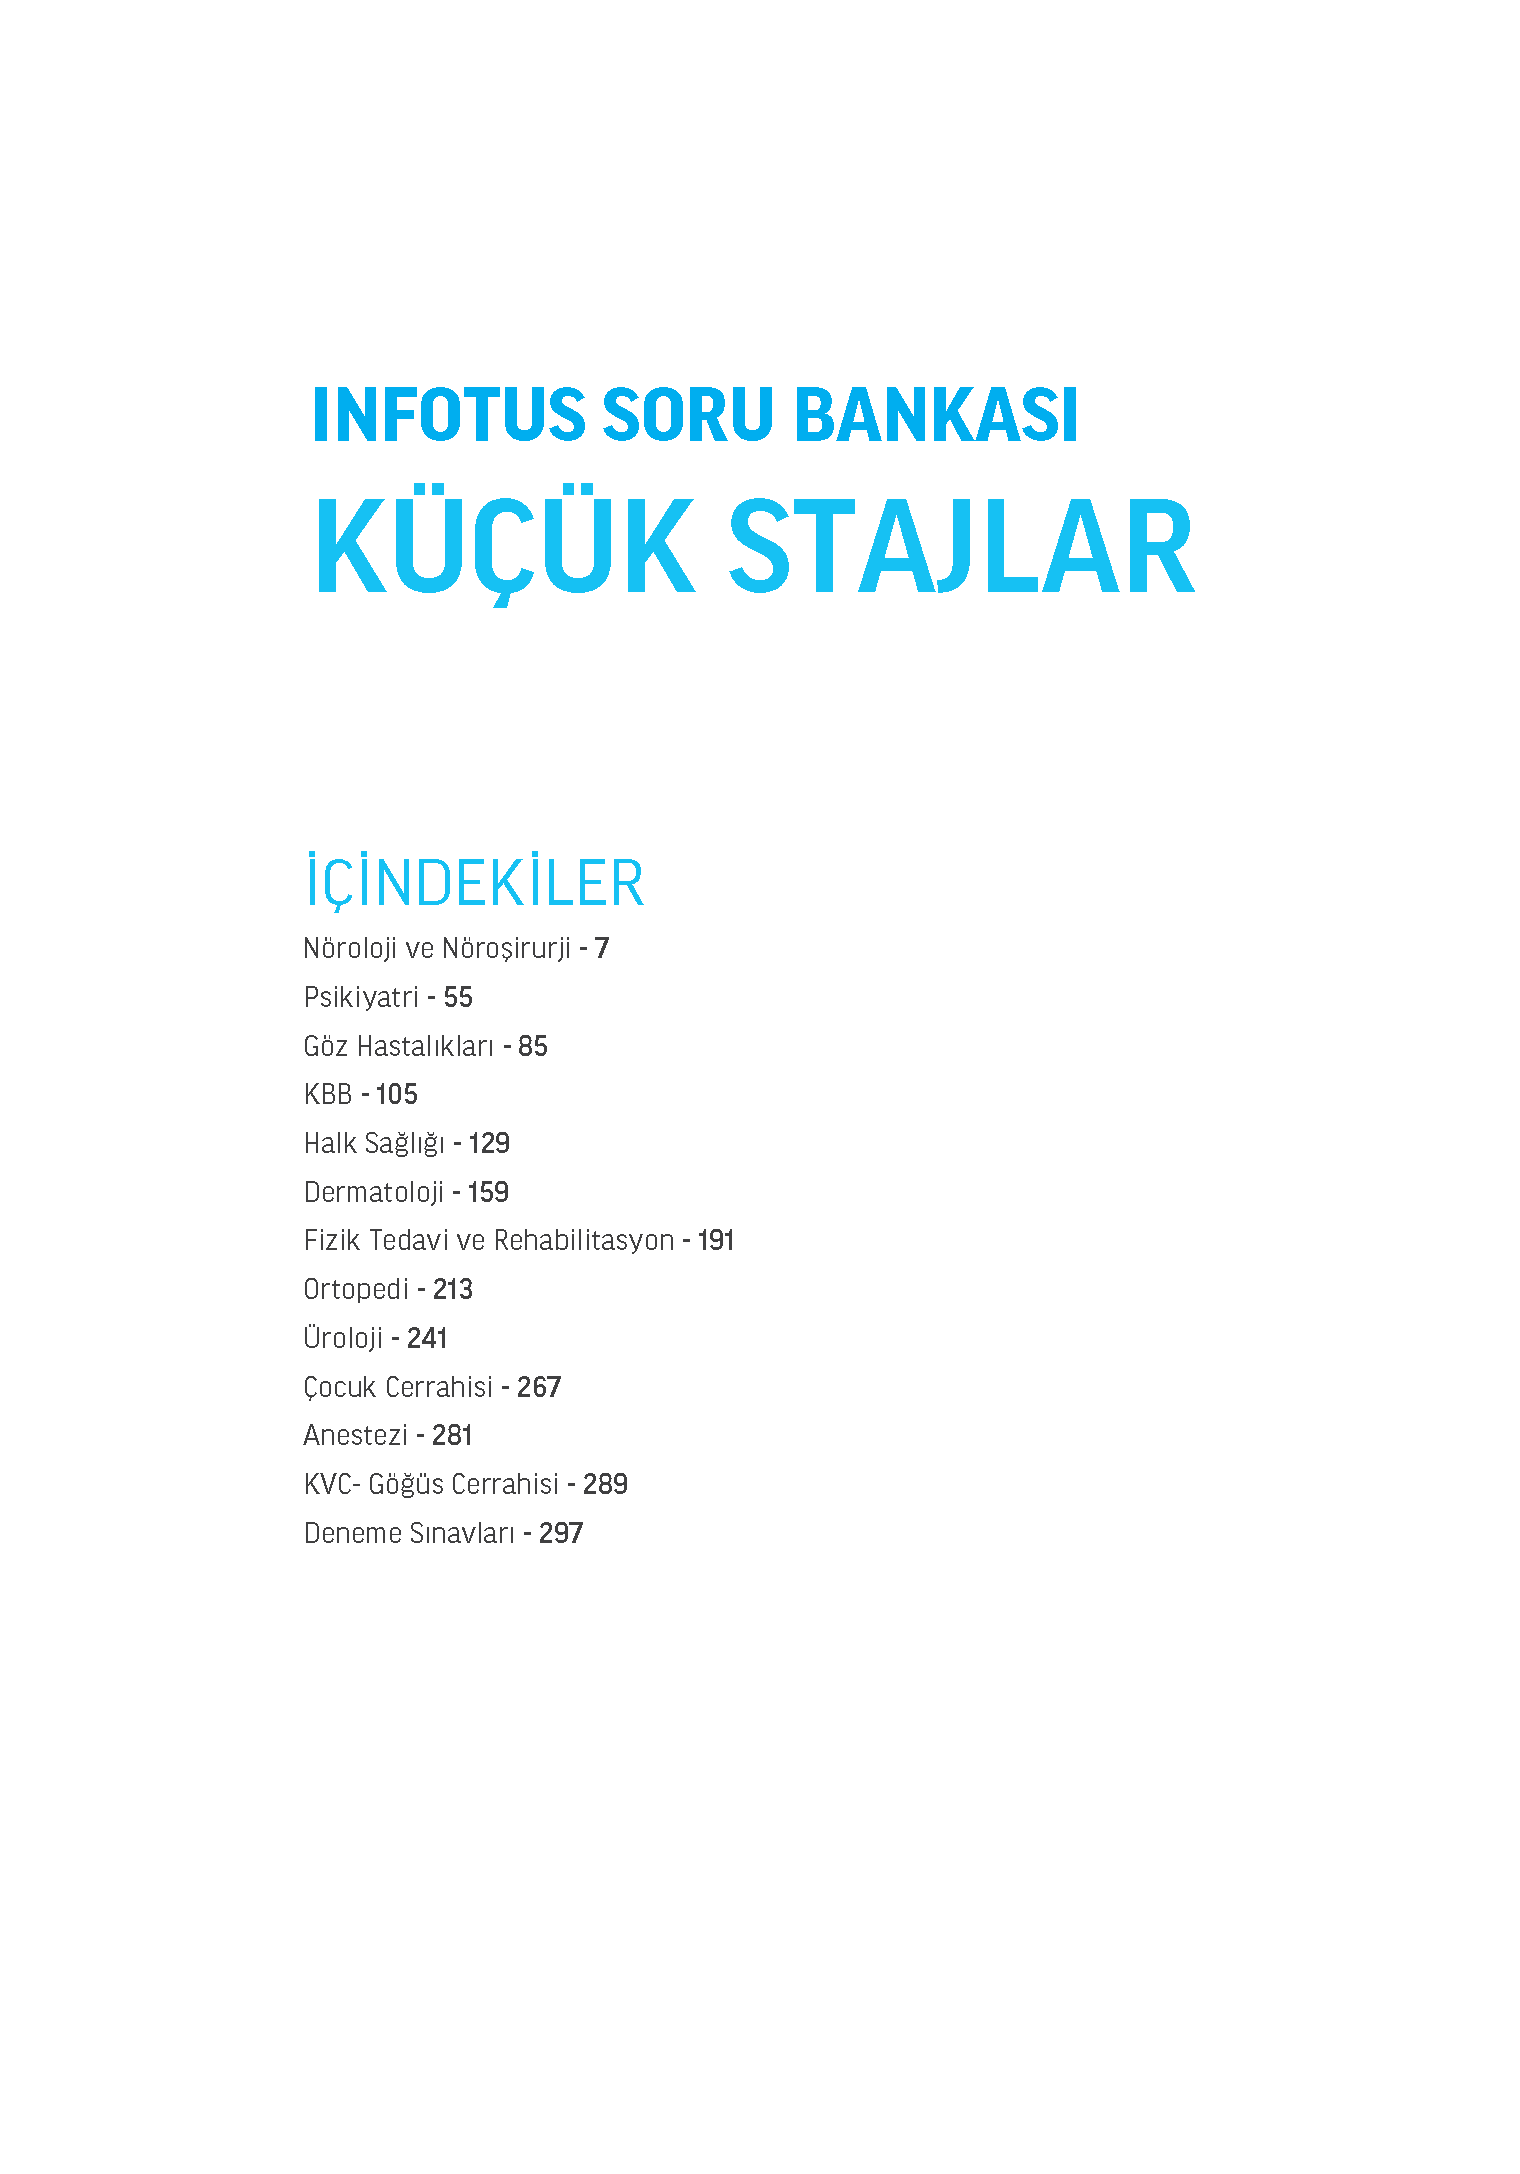 INFOTUS SORU BANKASI KUCUK STAJLAR (1)_Page_003